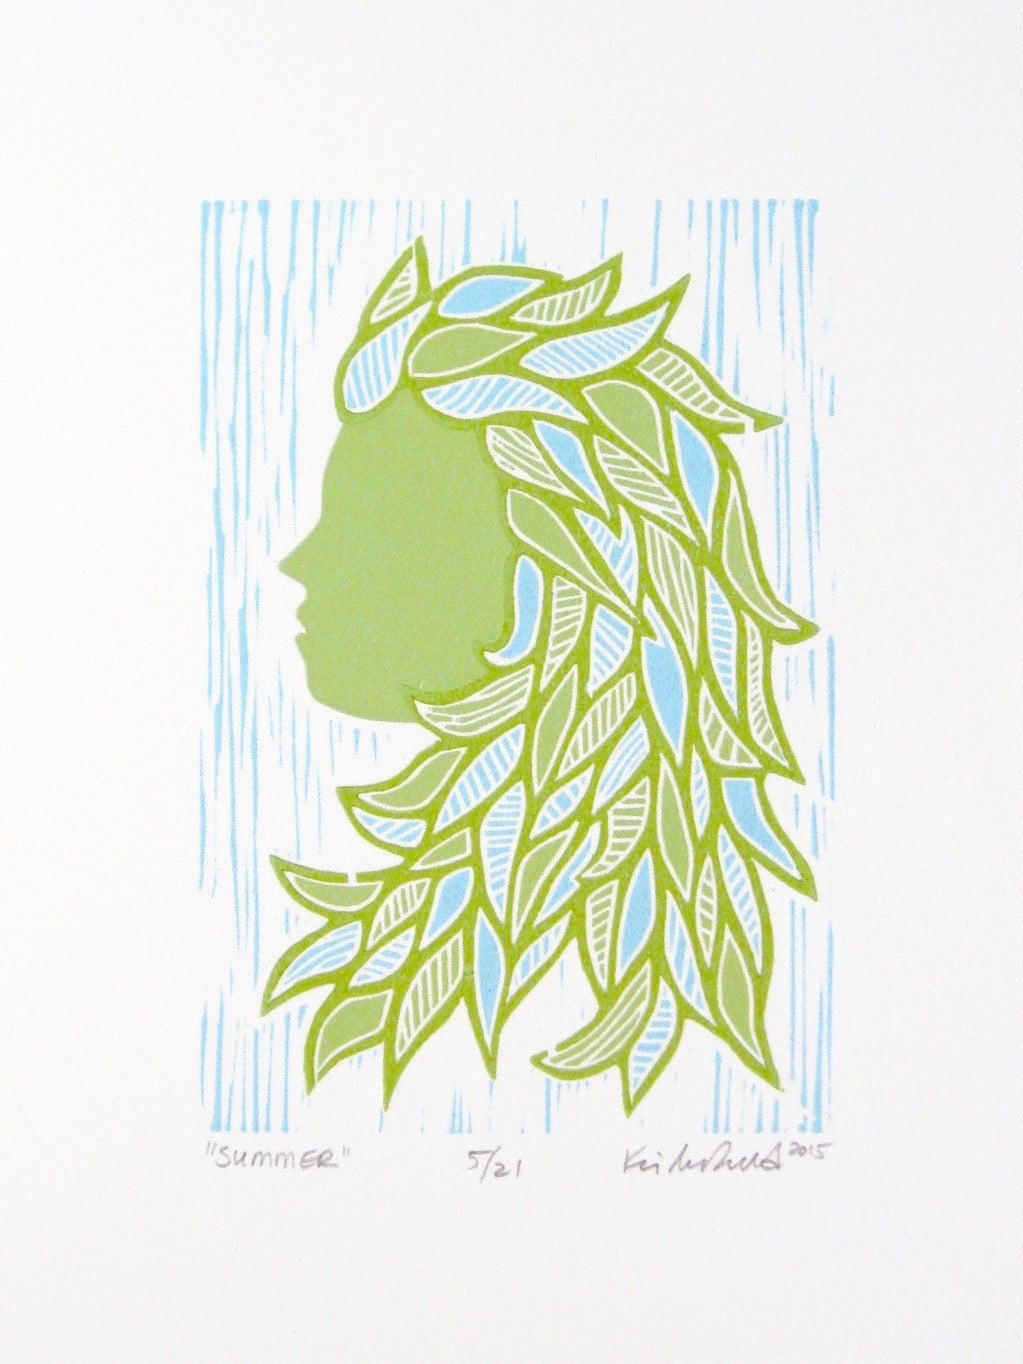 Summer woman - reduction woodblock print (9x12”)